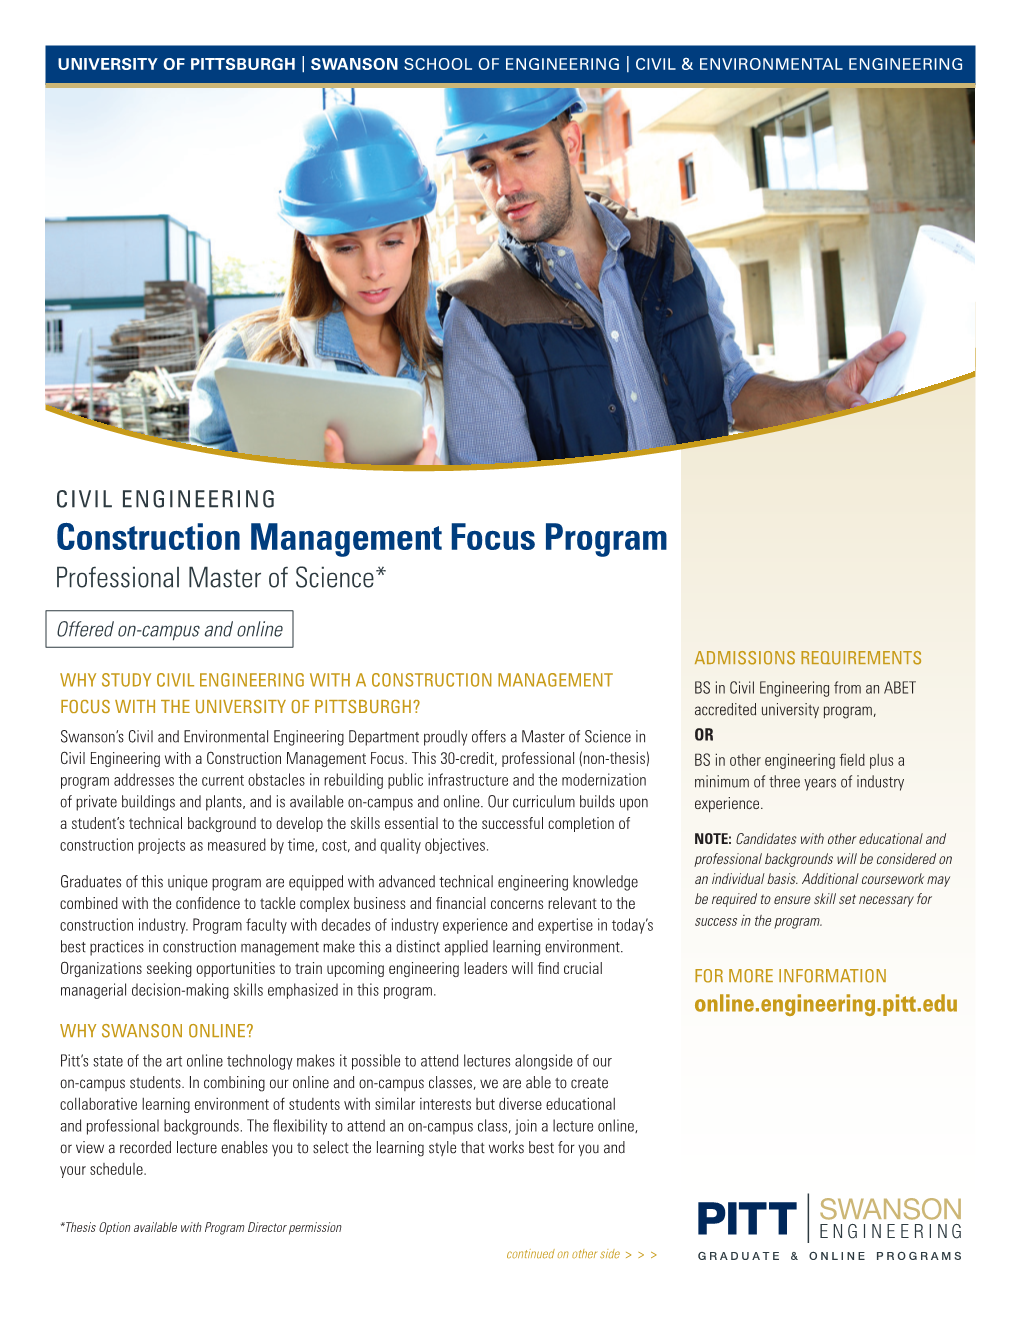 Construction Management Focus Program Professional Master of Science*